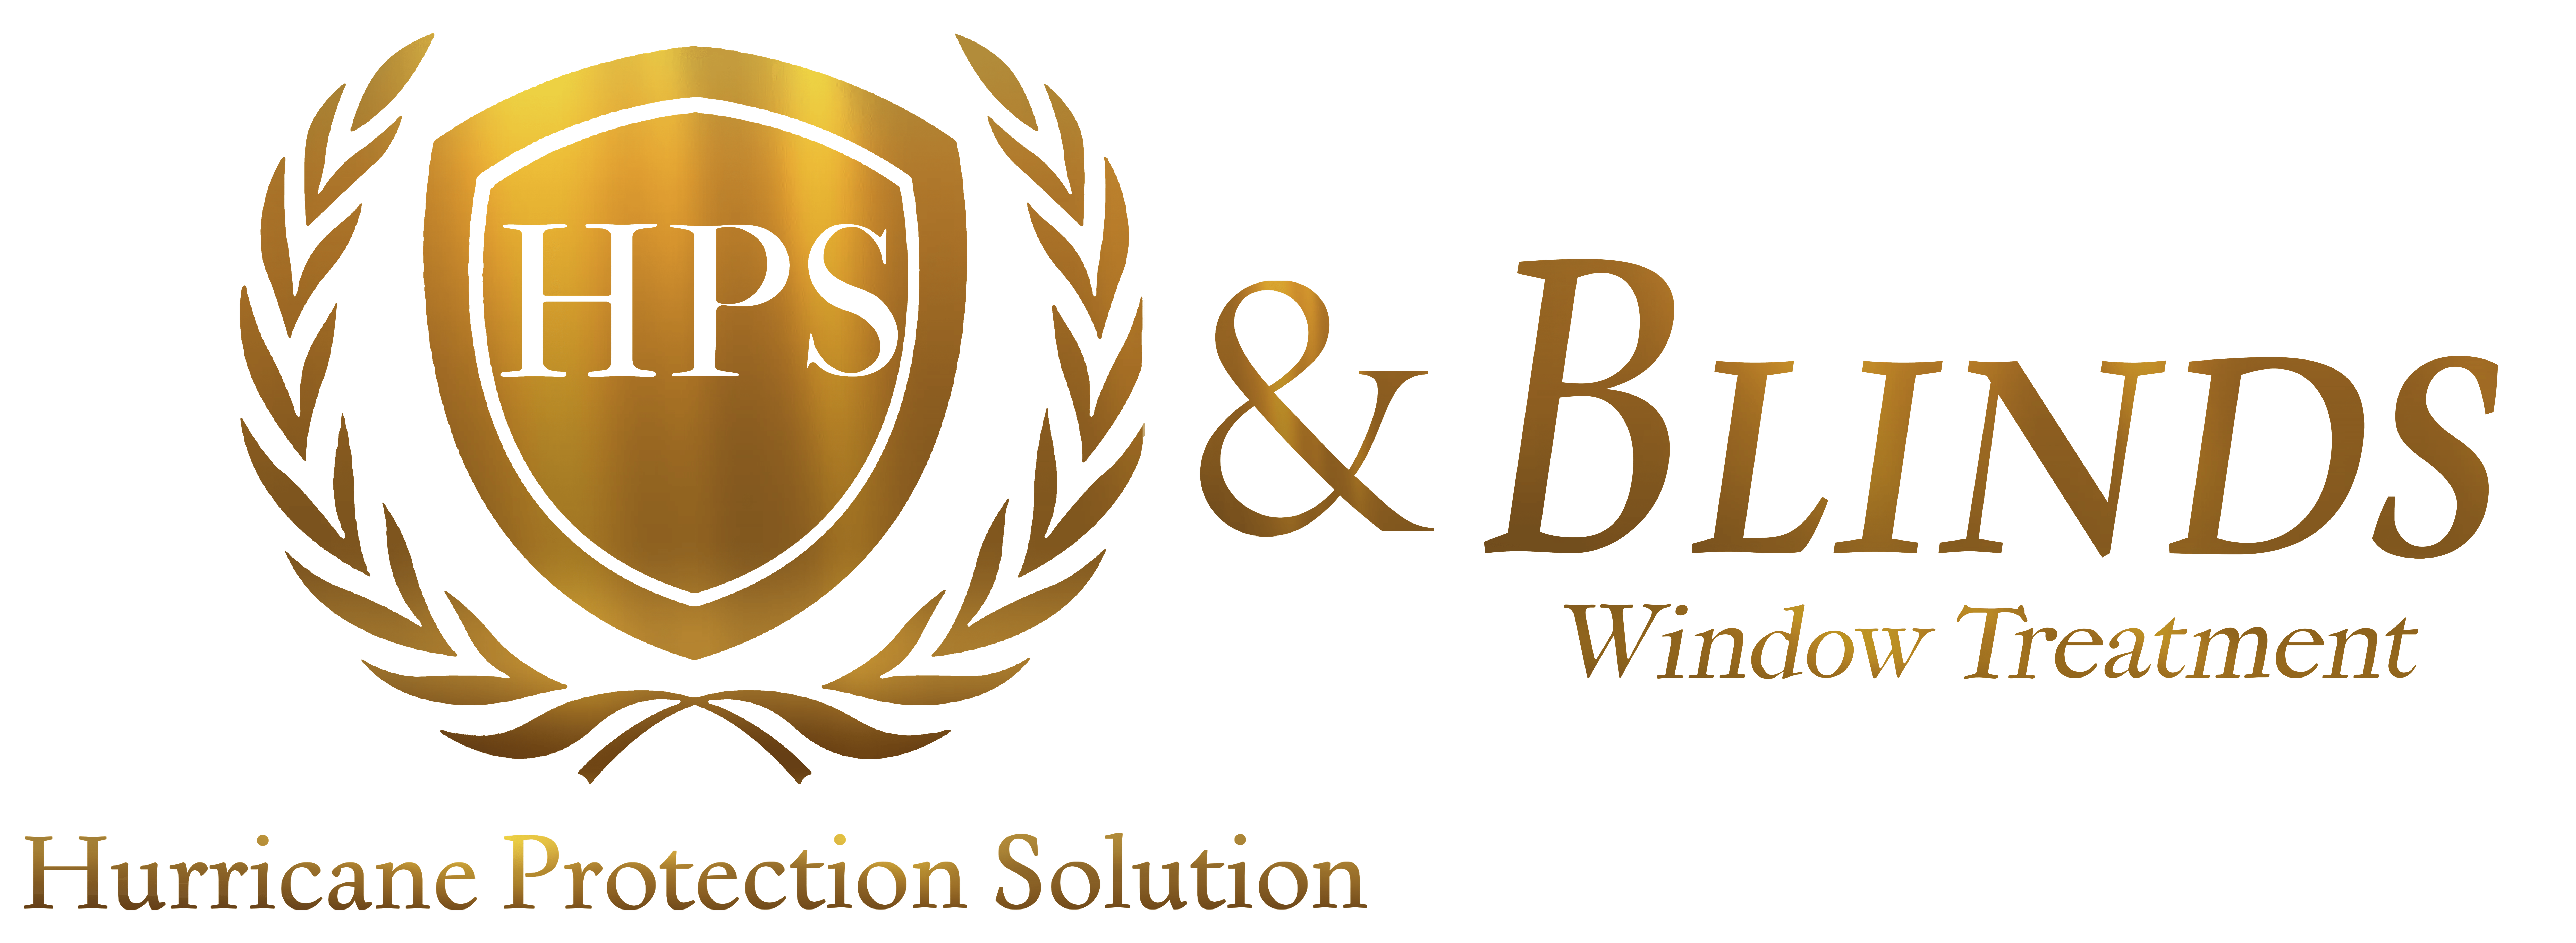 Hurricane Protection Solution & Blinds LLC Logo